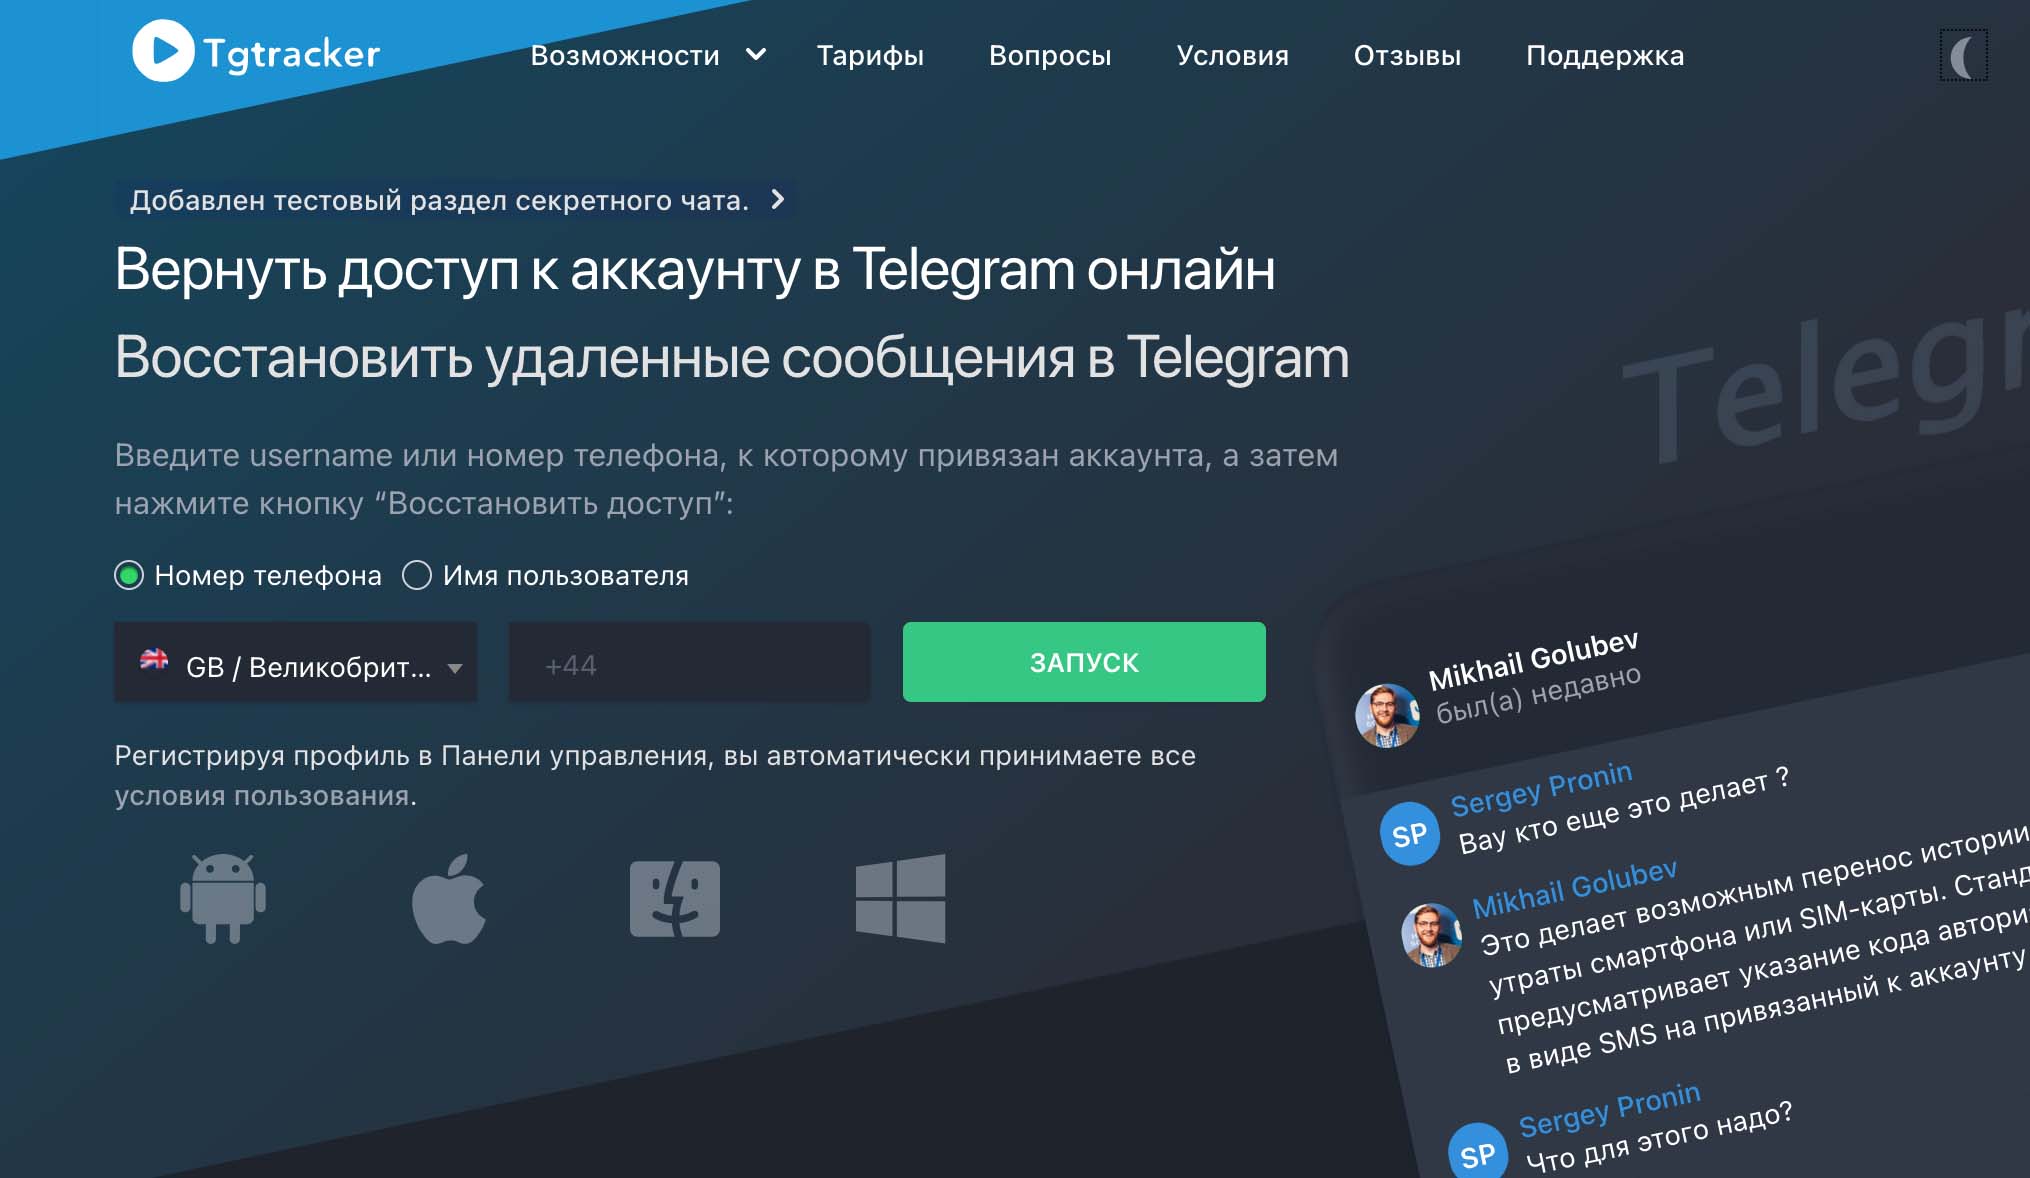 Como usar o Tgtracker para rastrear a atividade do utilizador no Telegram